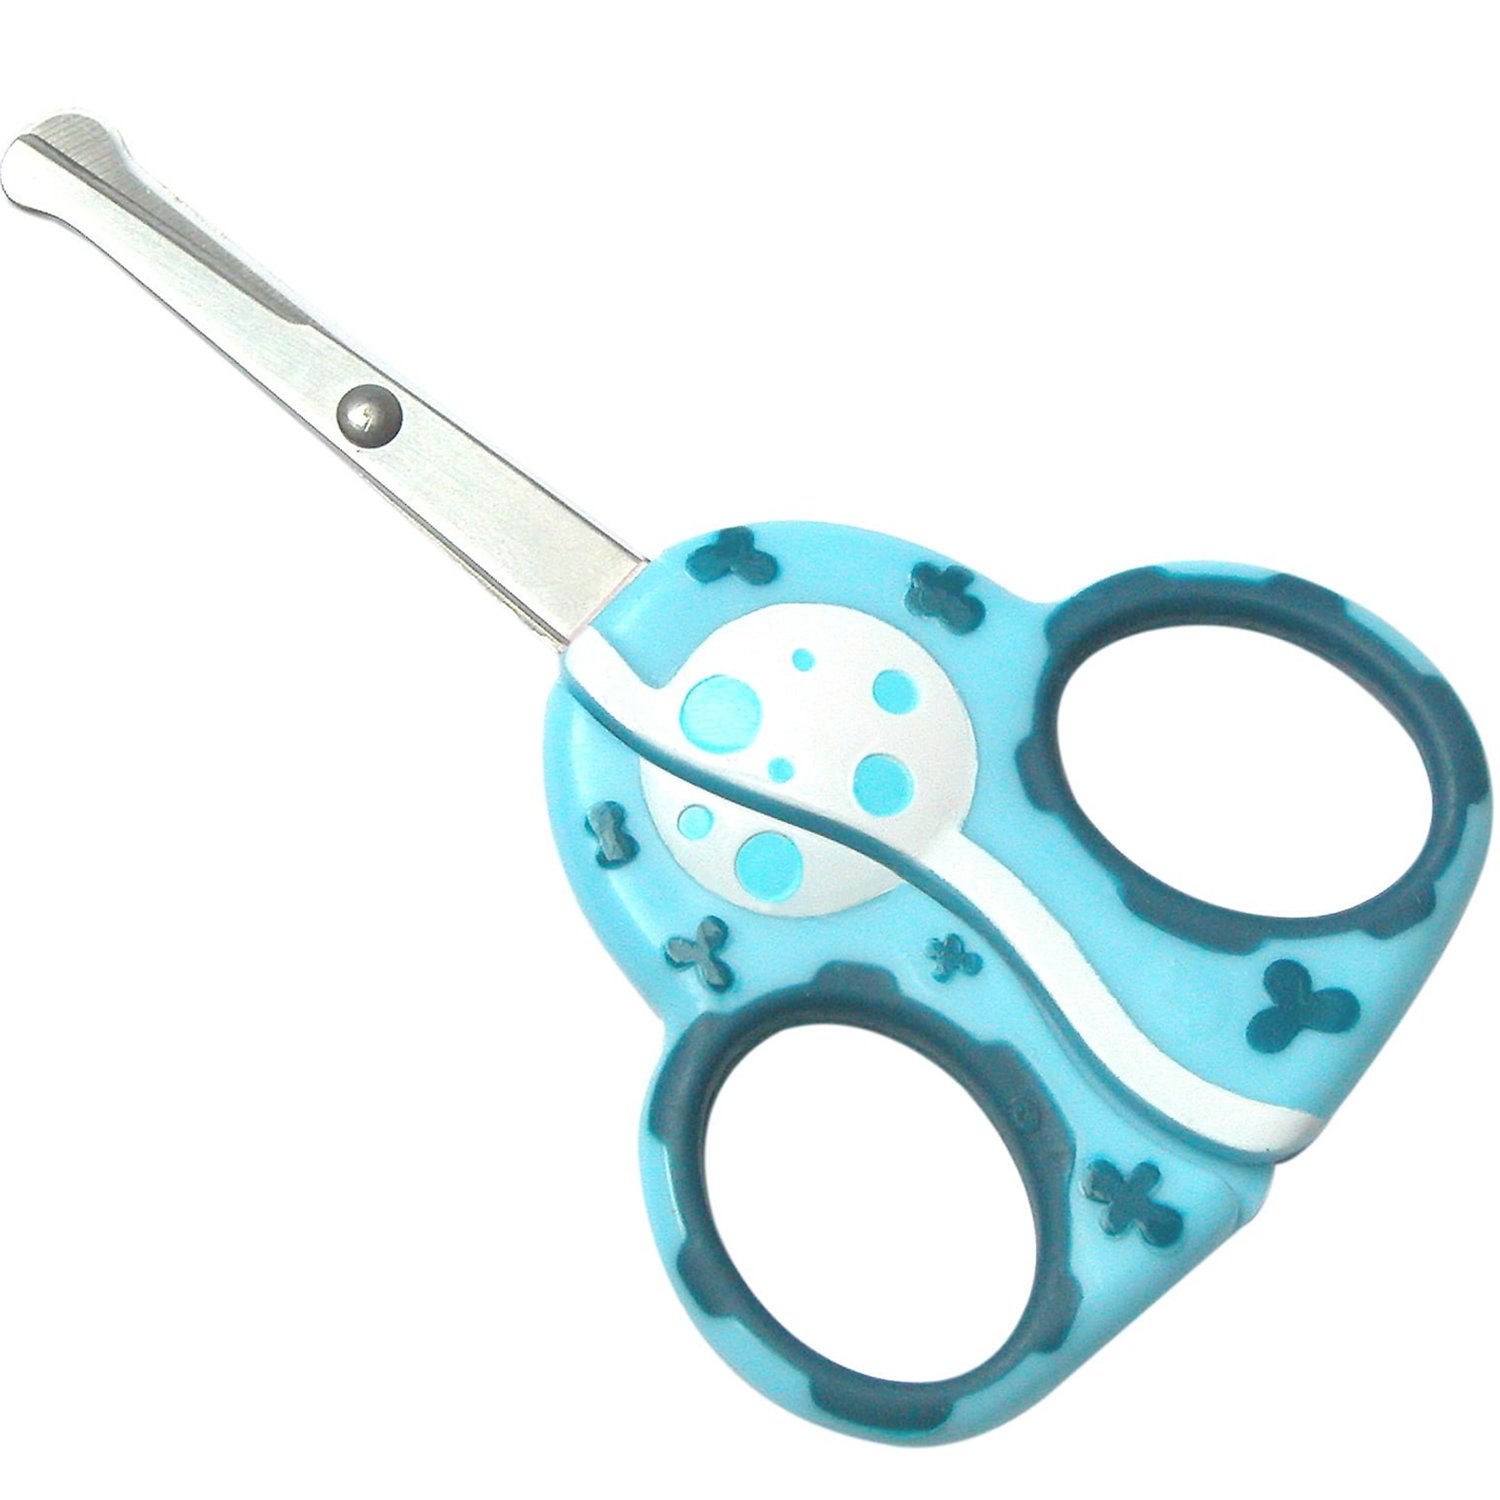 Mam Primamma Safety Scissors 0m+ Γαλάζιο Ψαλιδάκι Ασφαλείας για Περιποίηση των Πρώτων Νυχιών του Μωρού 1 Τεμάχιο, Κωδ 900B